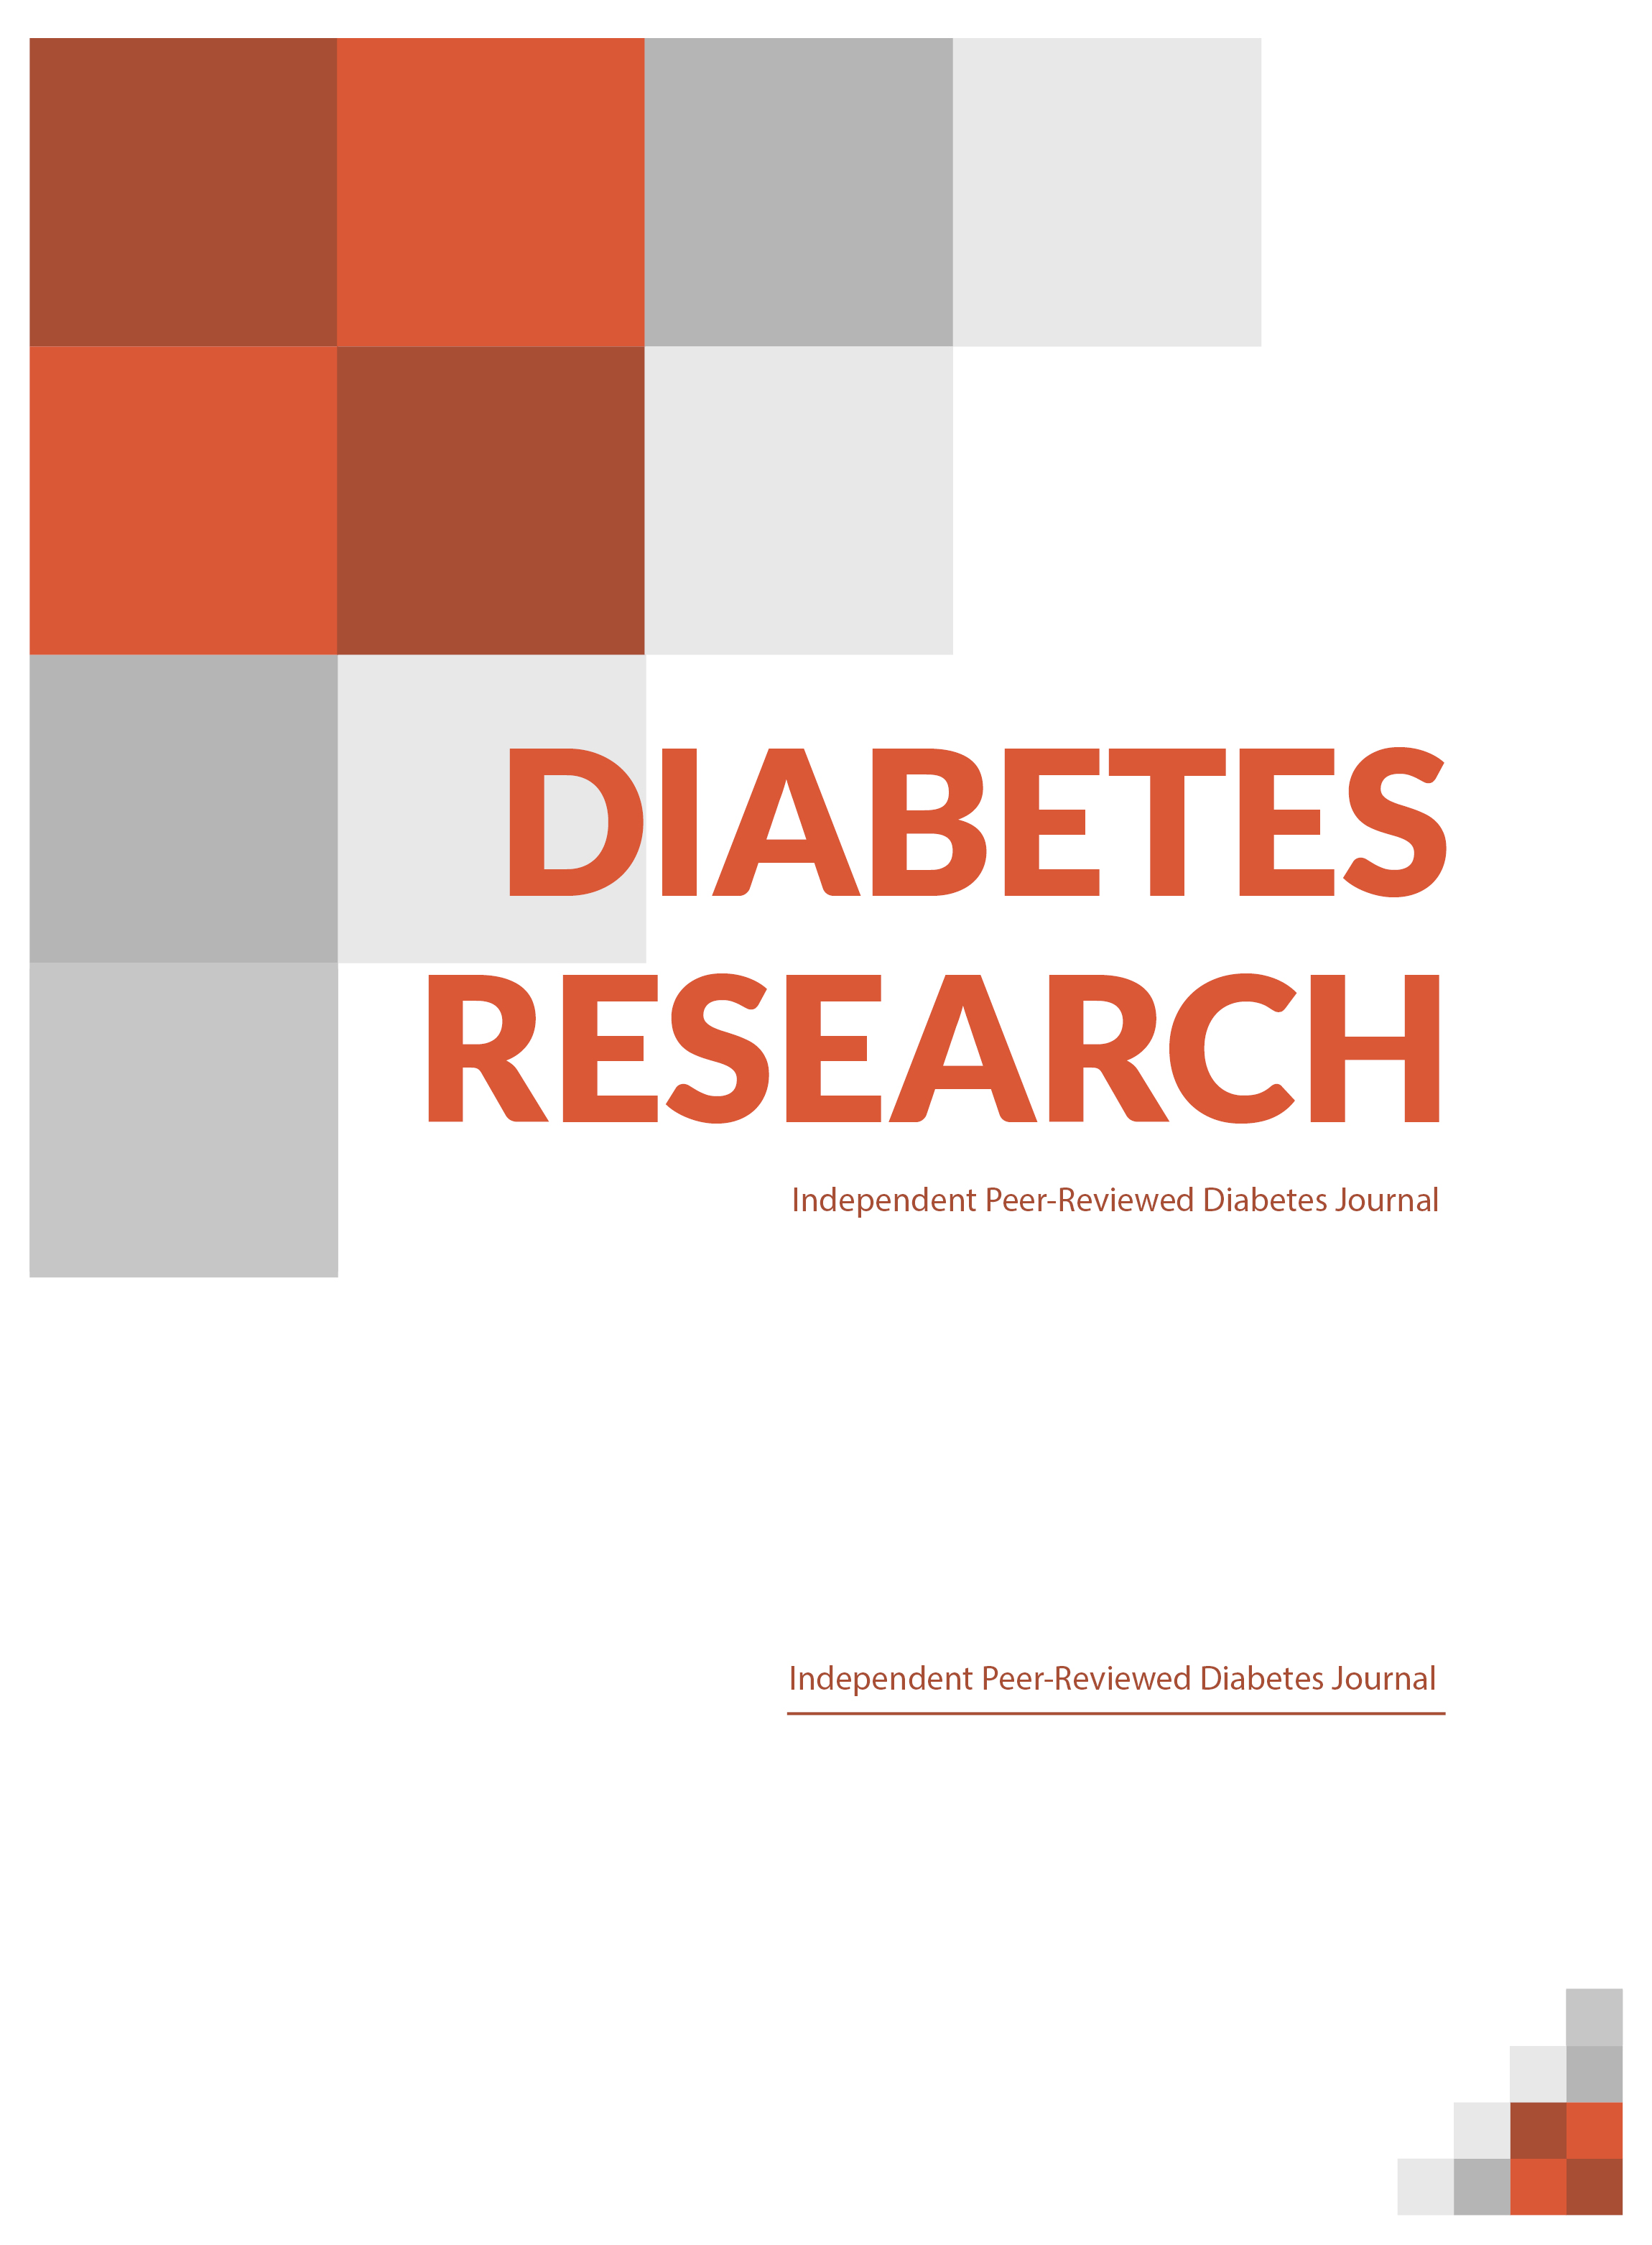 recent research studies on diabetes